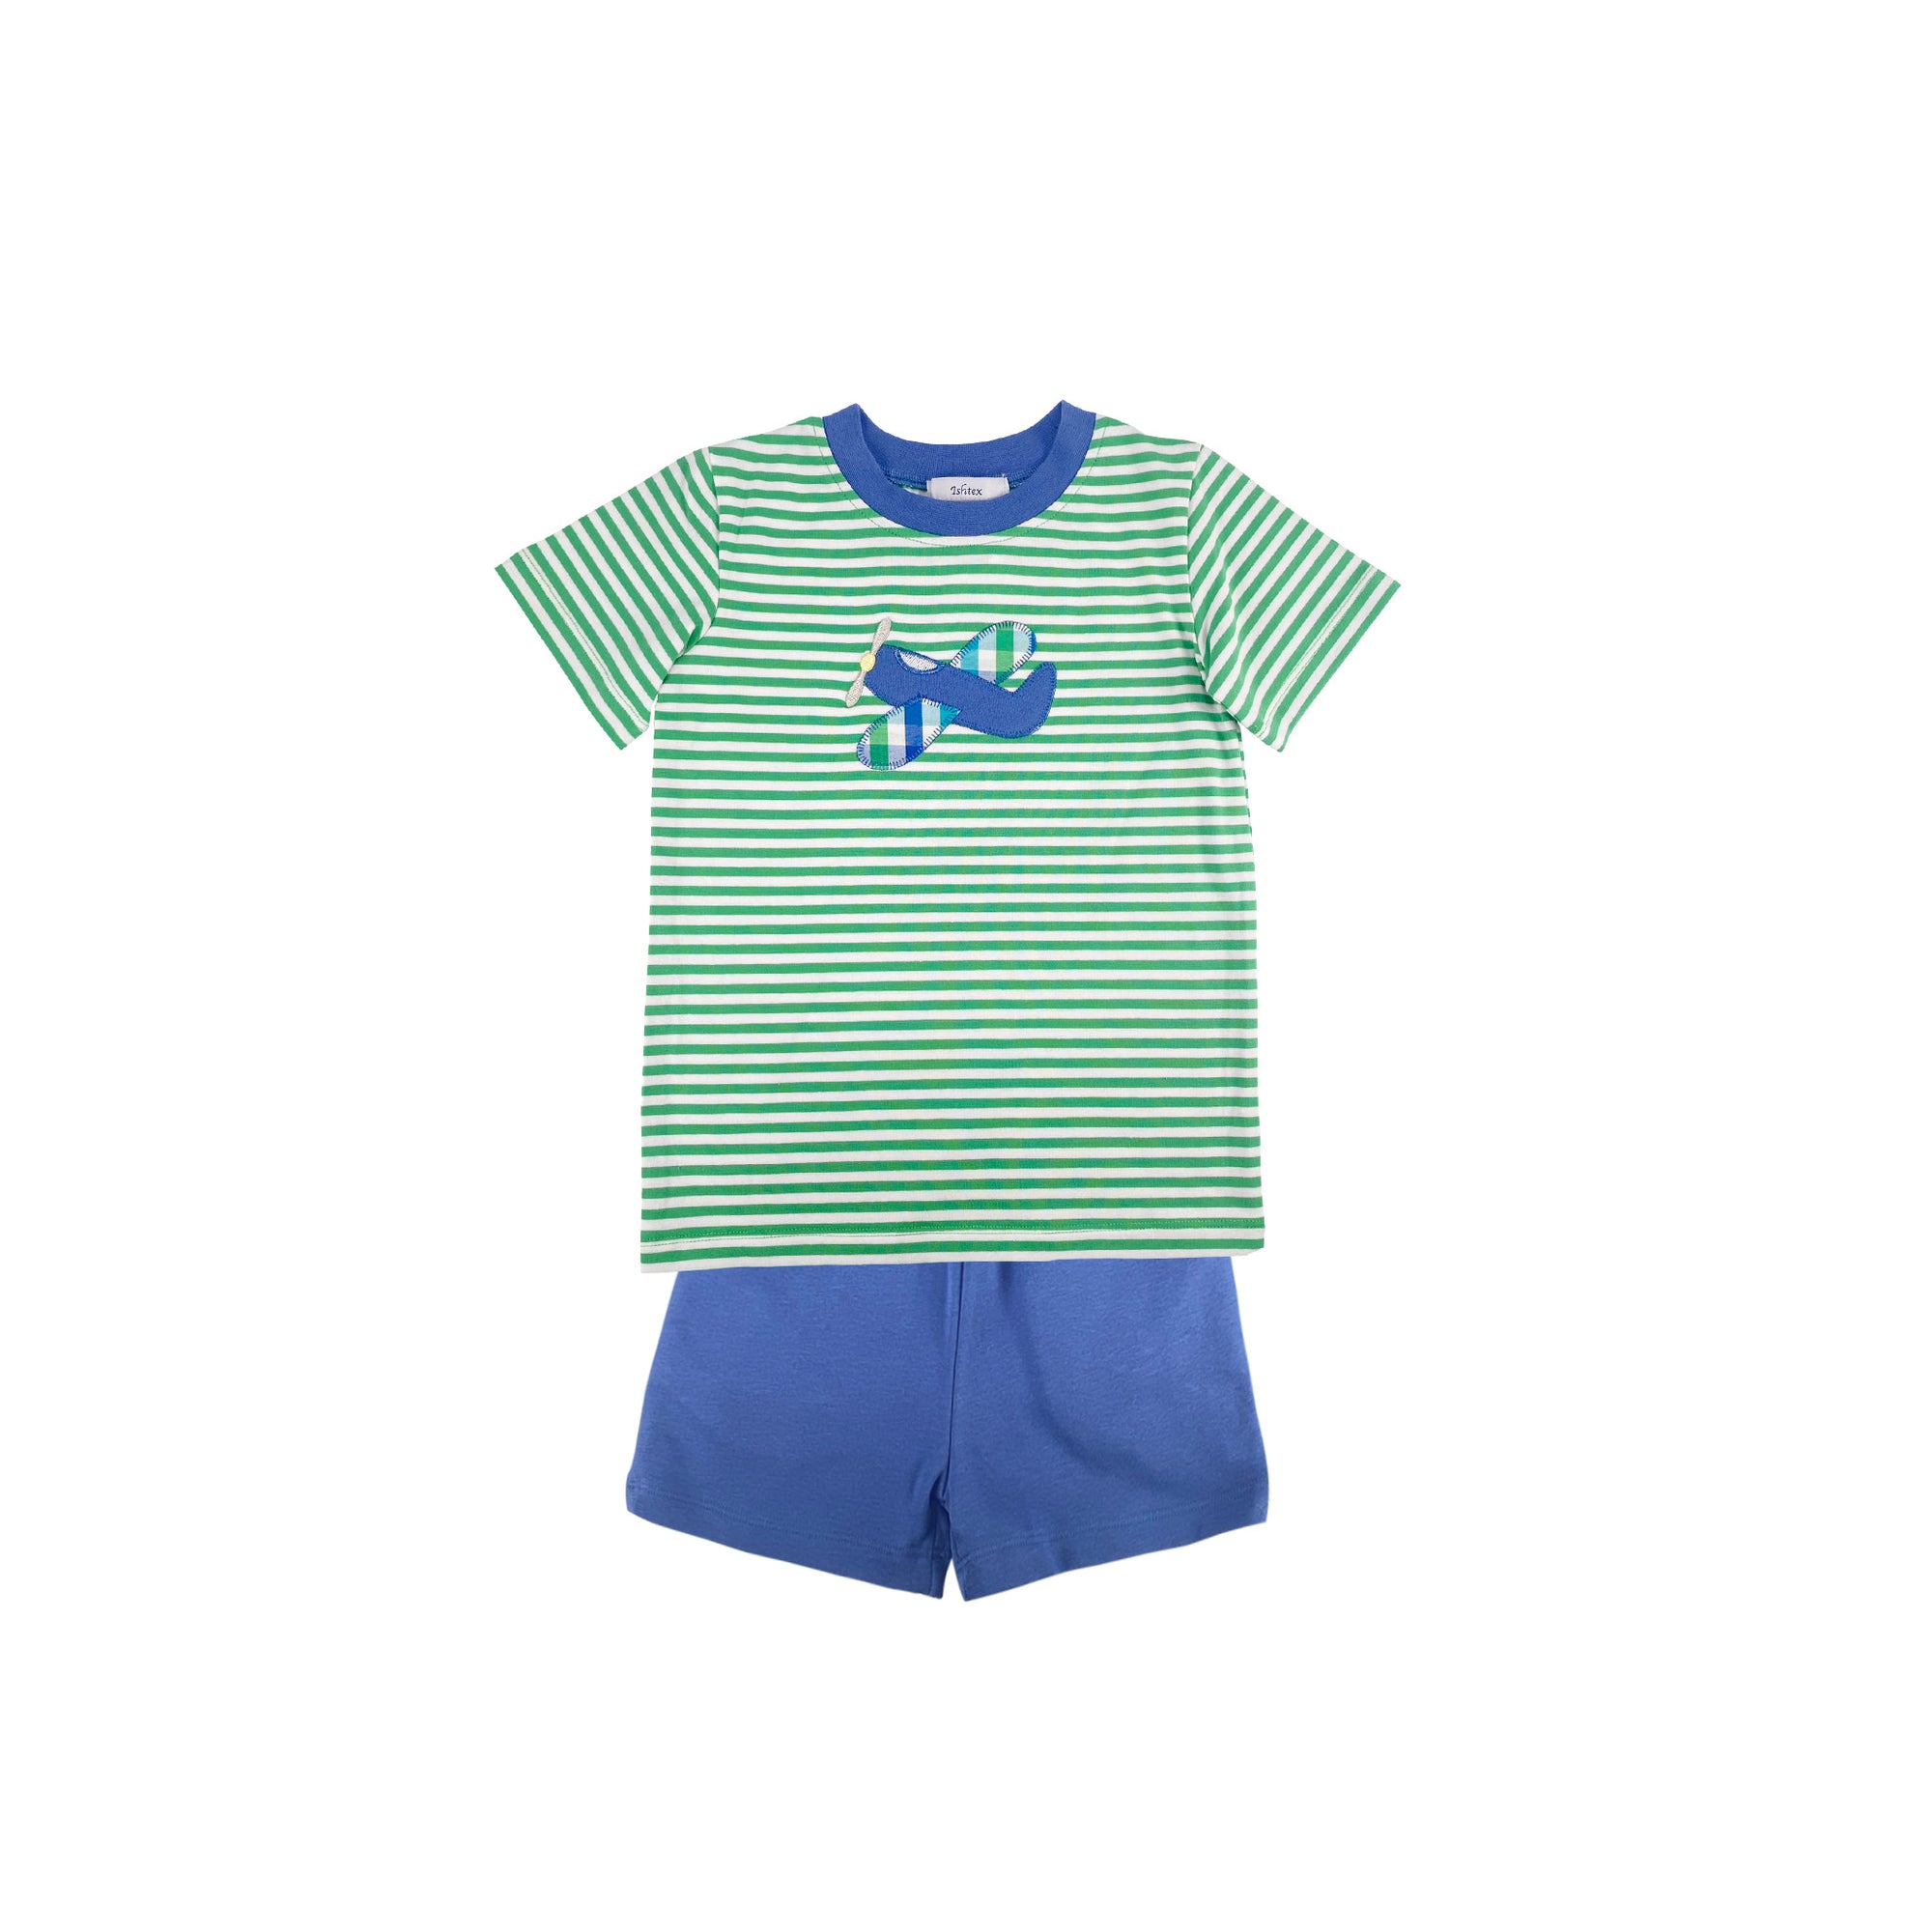 boy's shorts set, airplane, green, blue